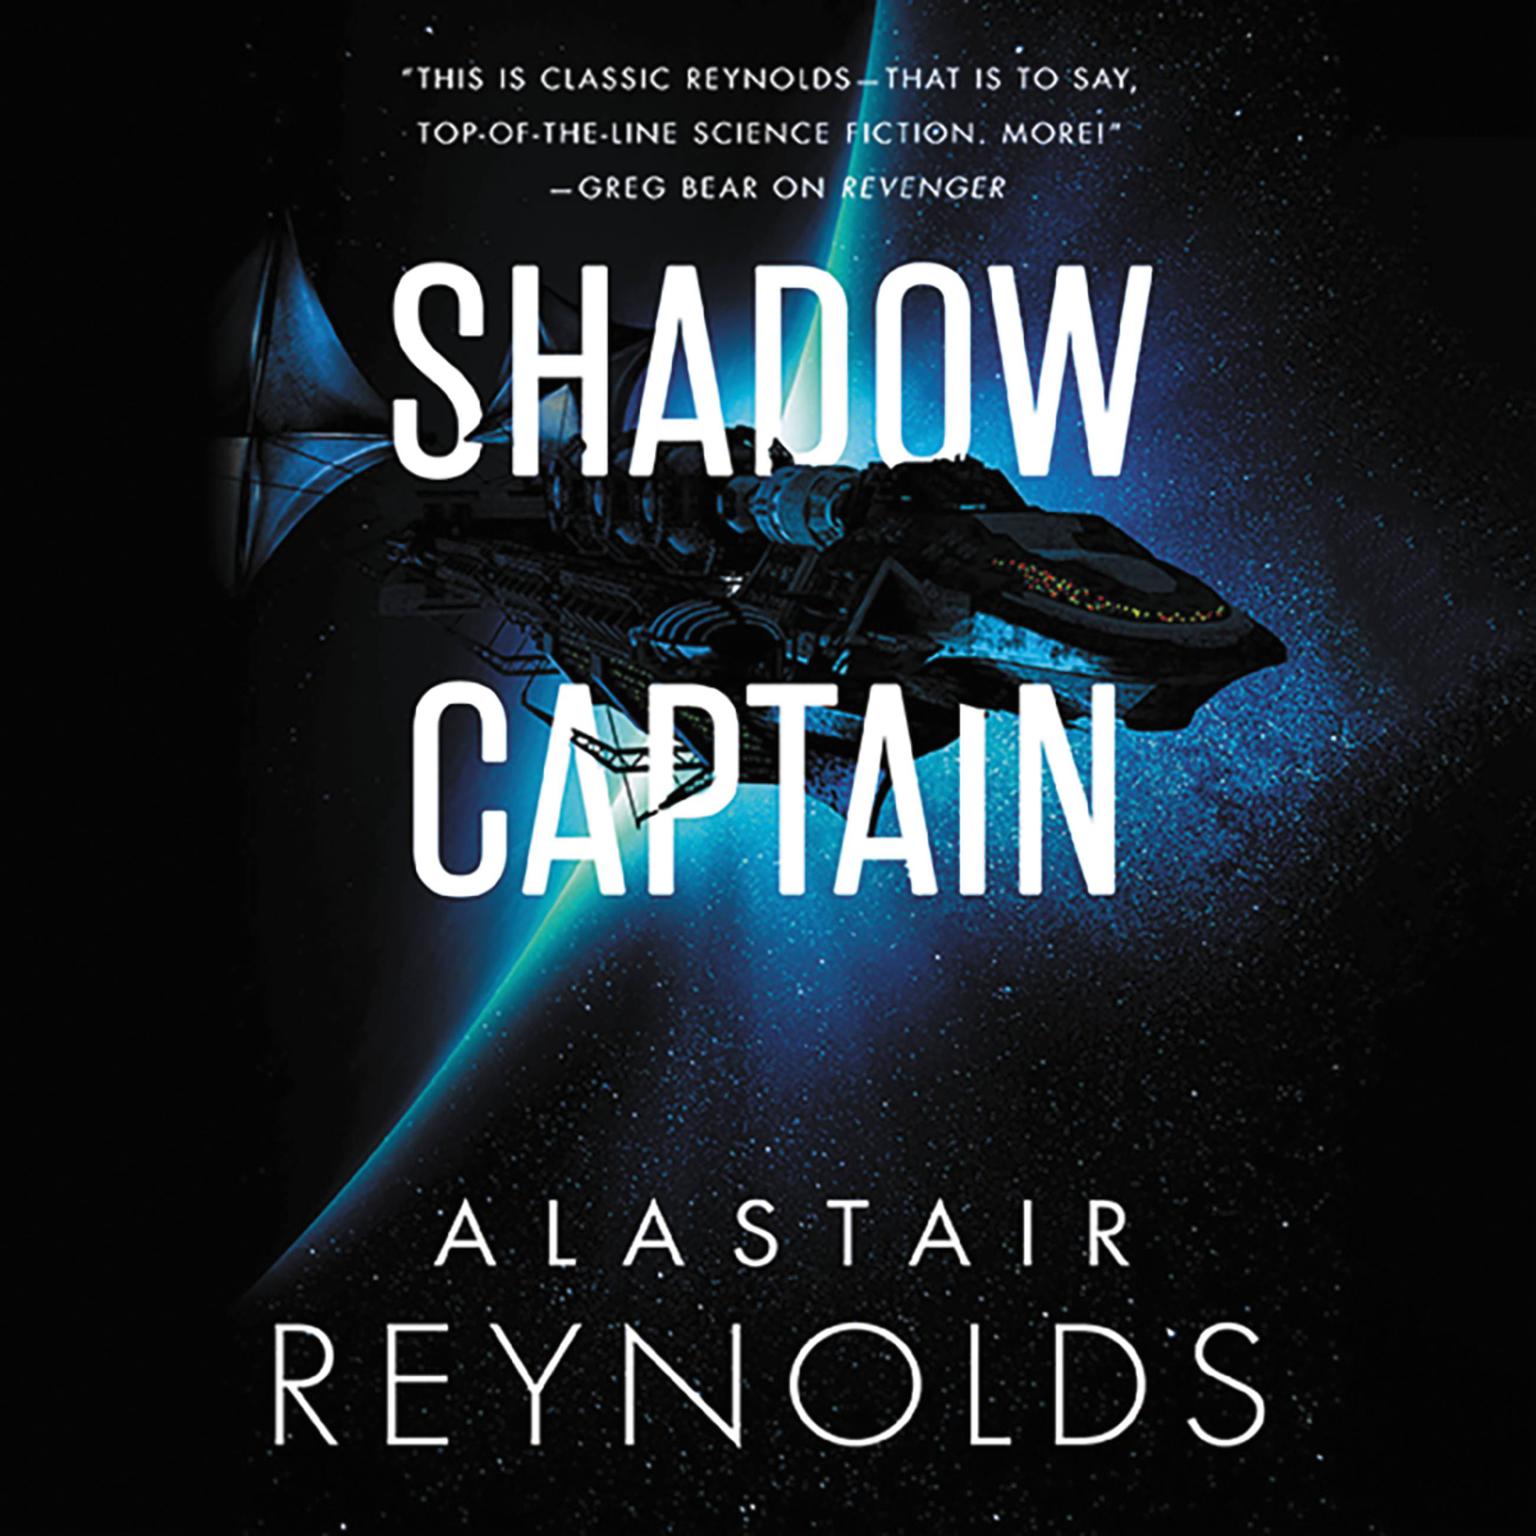 Shadow Captain Audiobook by Alastair Reynolds — AudiobookSTORE.com